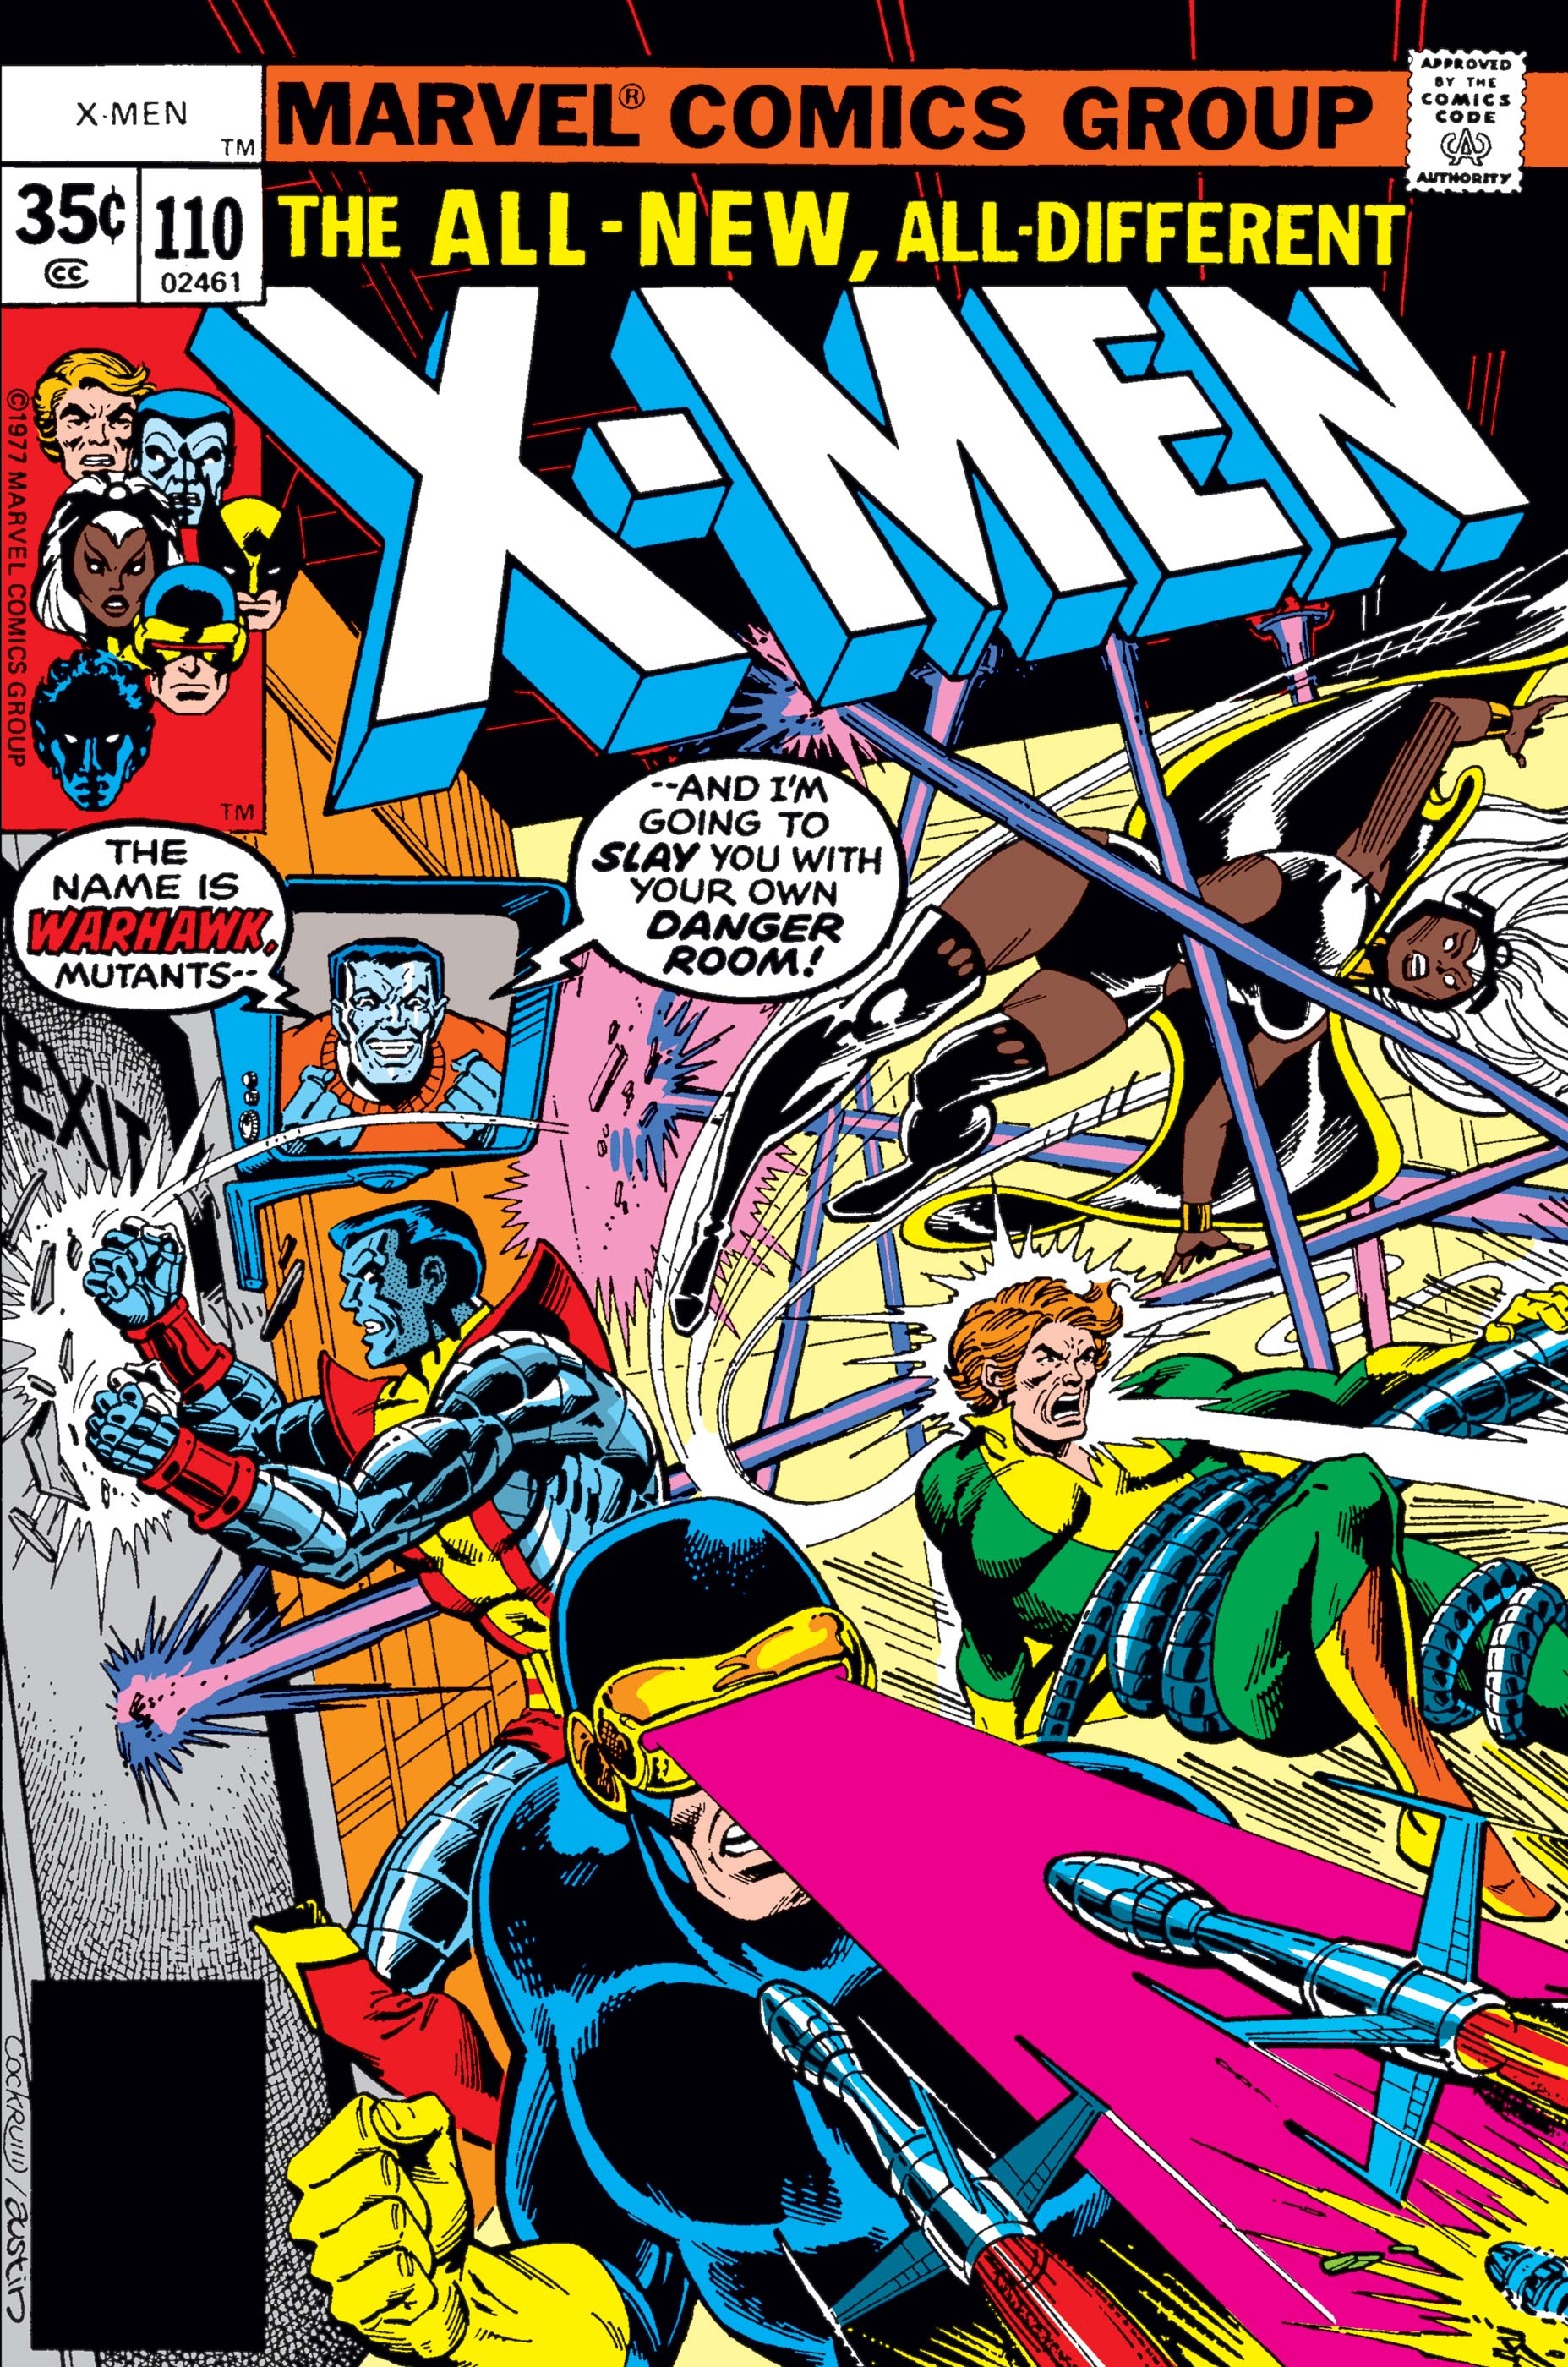 Uncanny X-Men (1981) #110